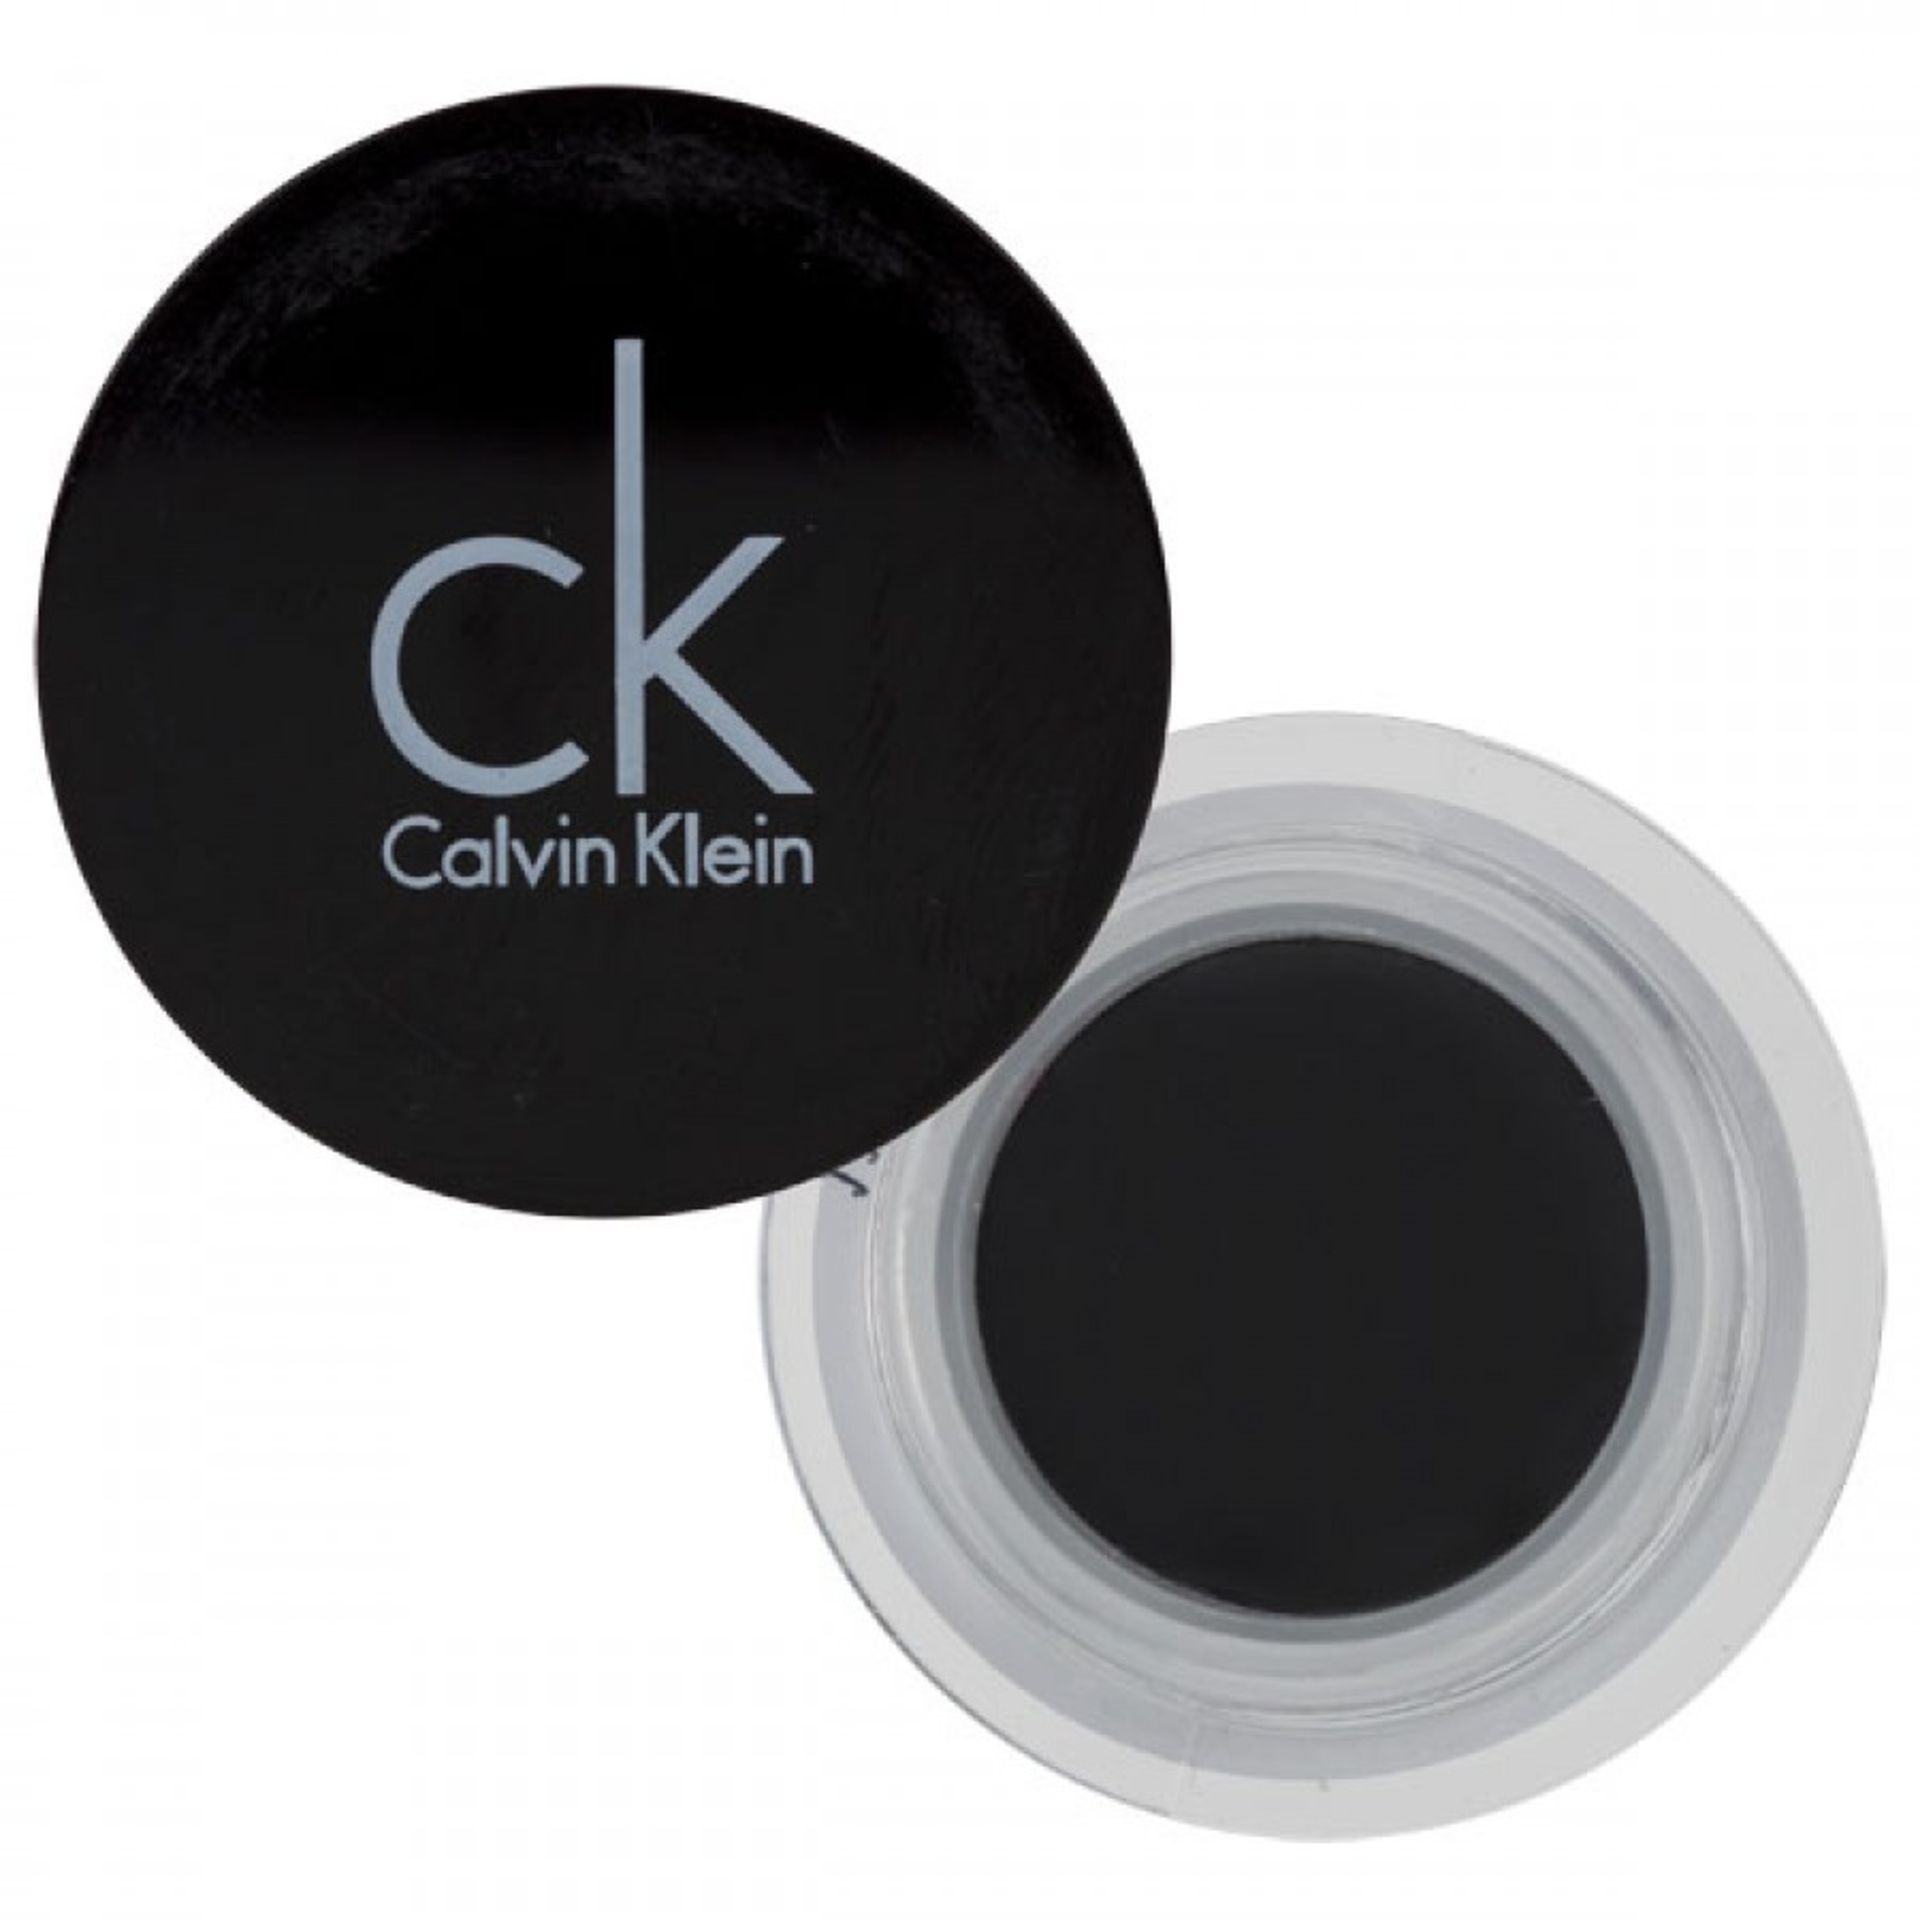 288 x ck Tempting Glimmer Sheer Crème Eyeshadow – 1 Shade - NO VAT